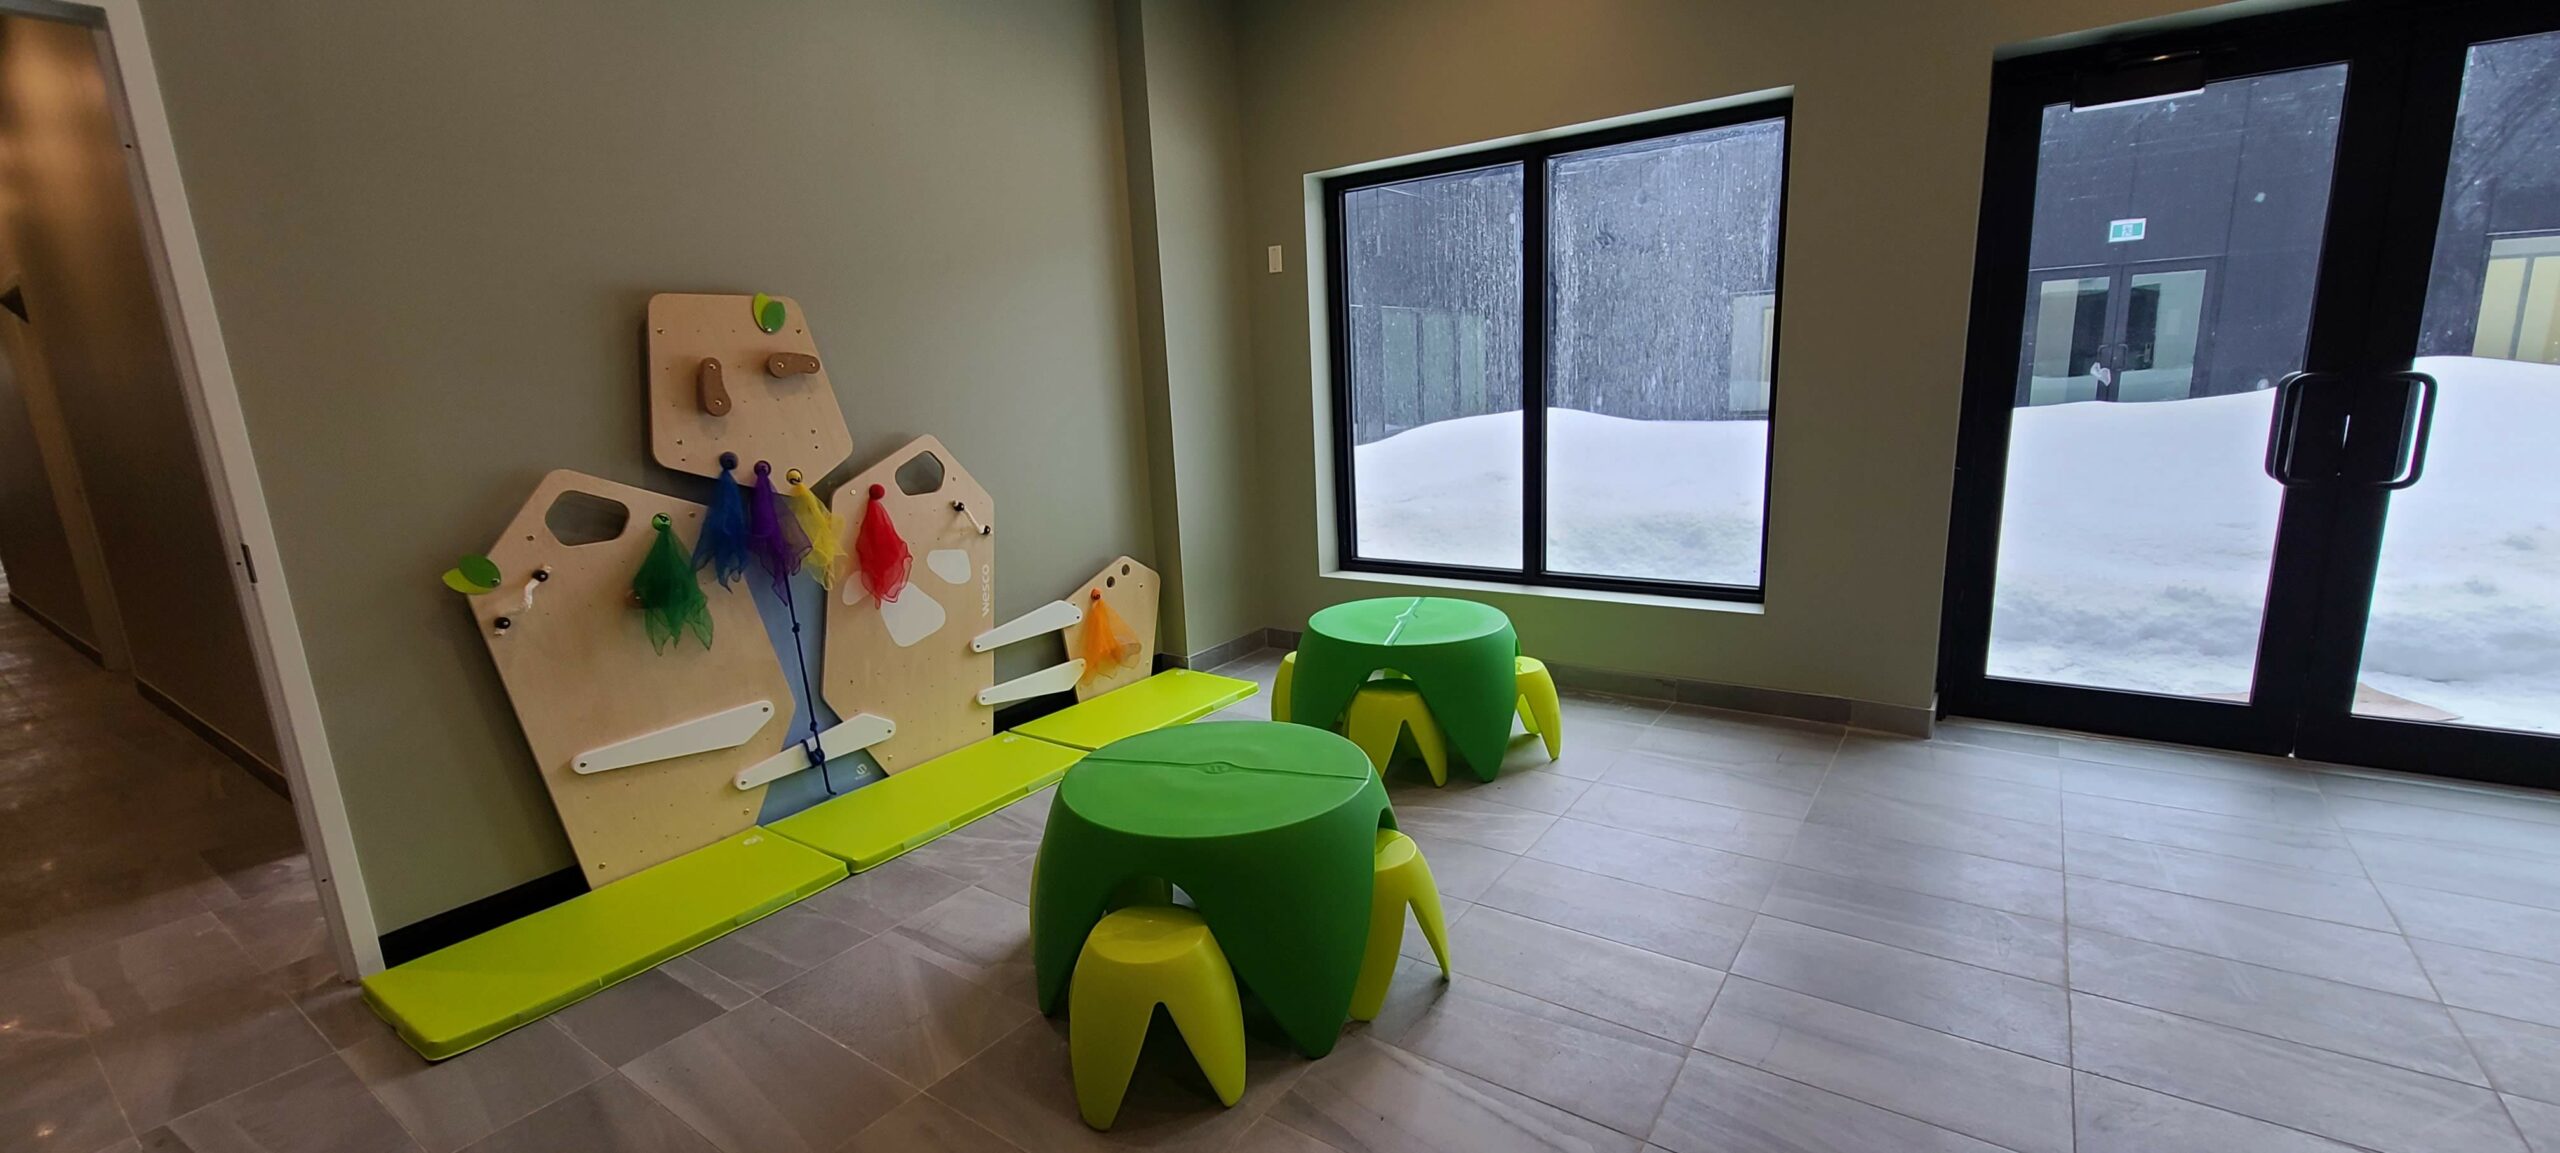 Montreal Indoor Playground Amusement Concepts